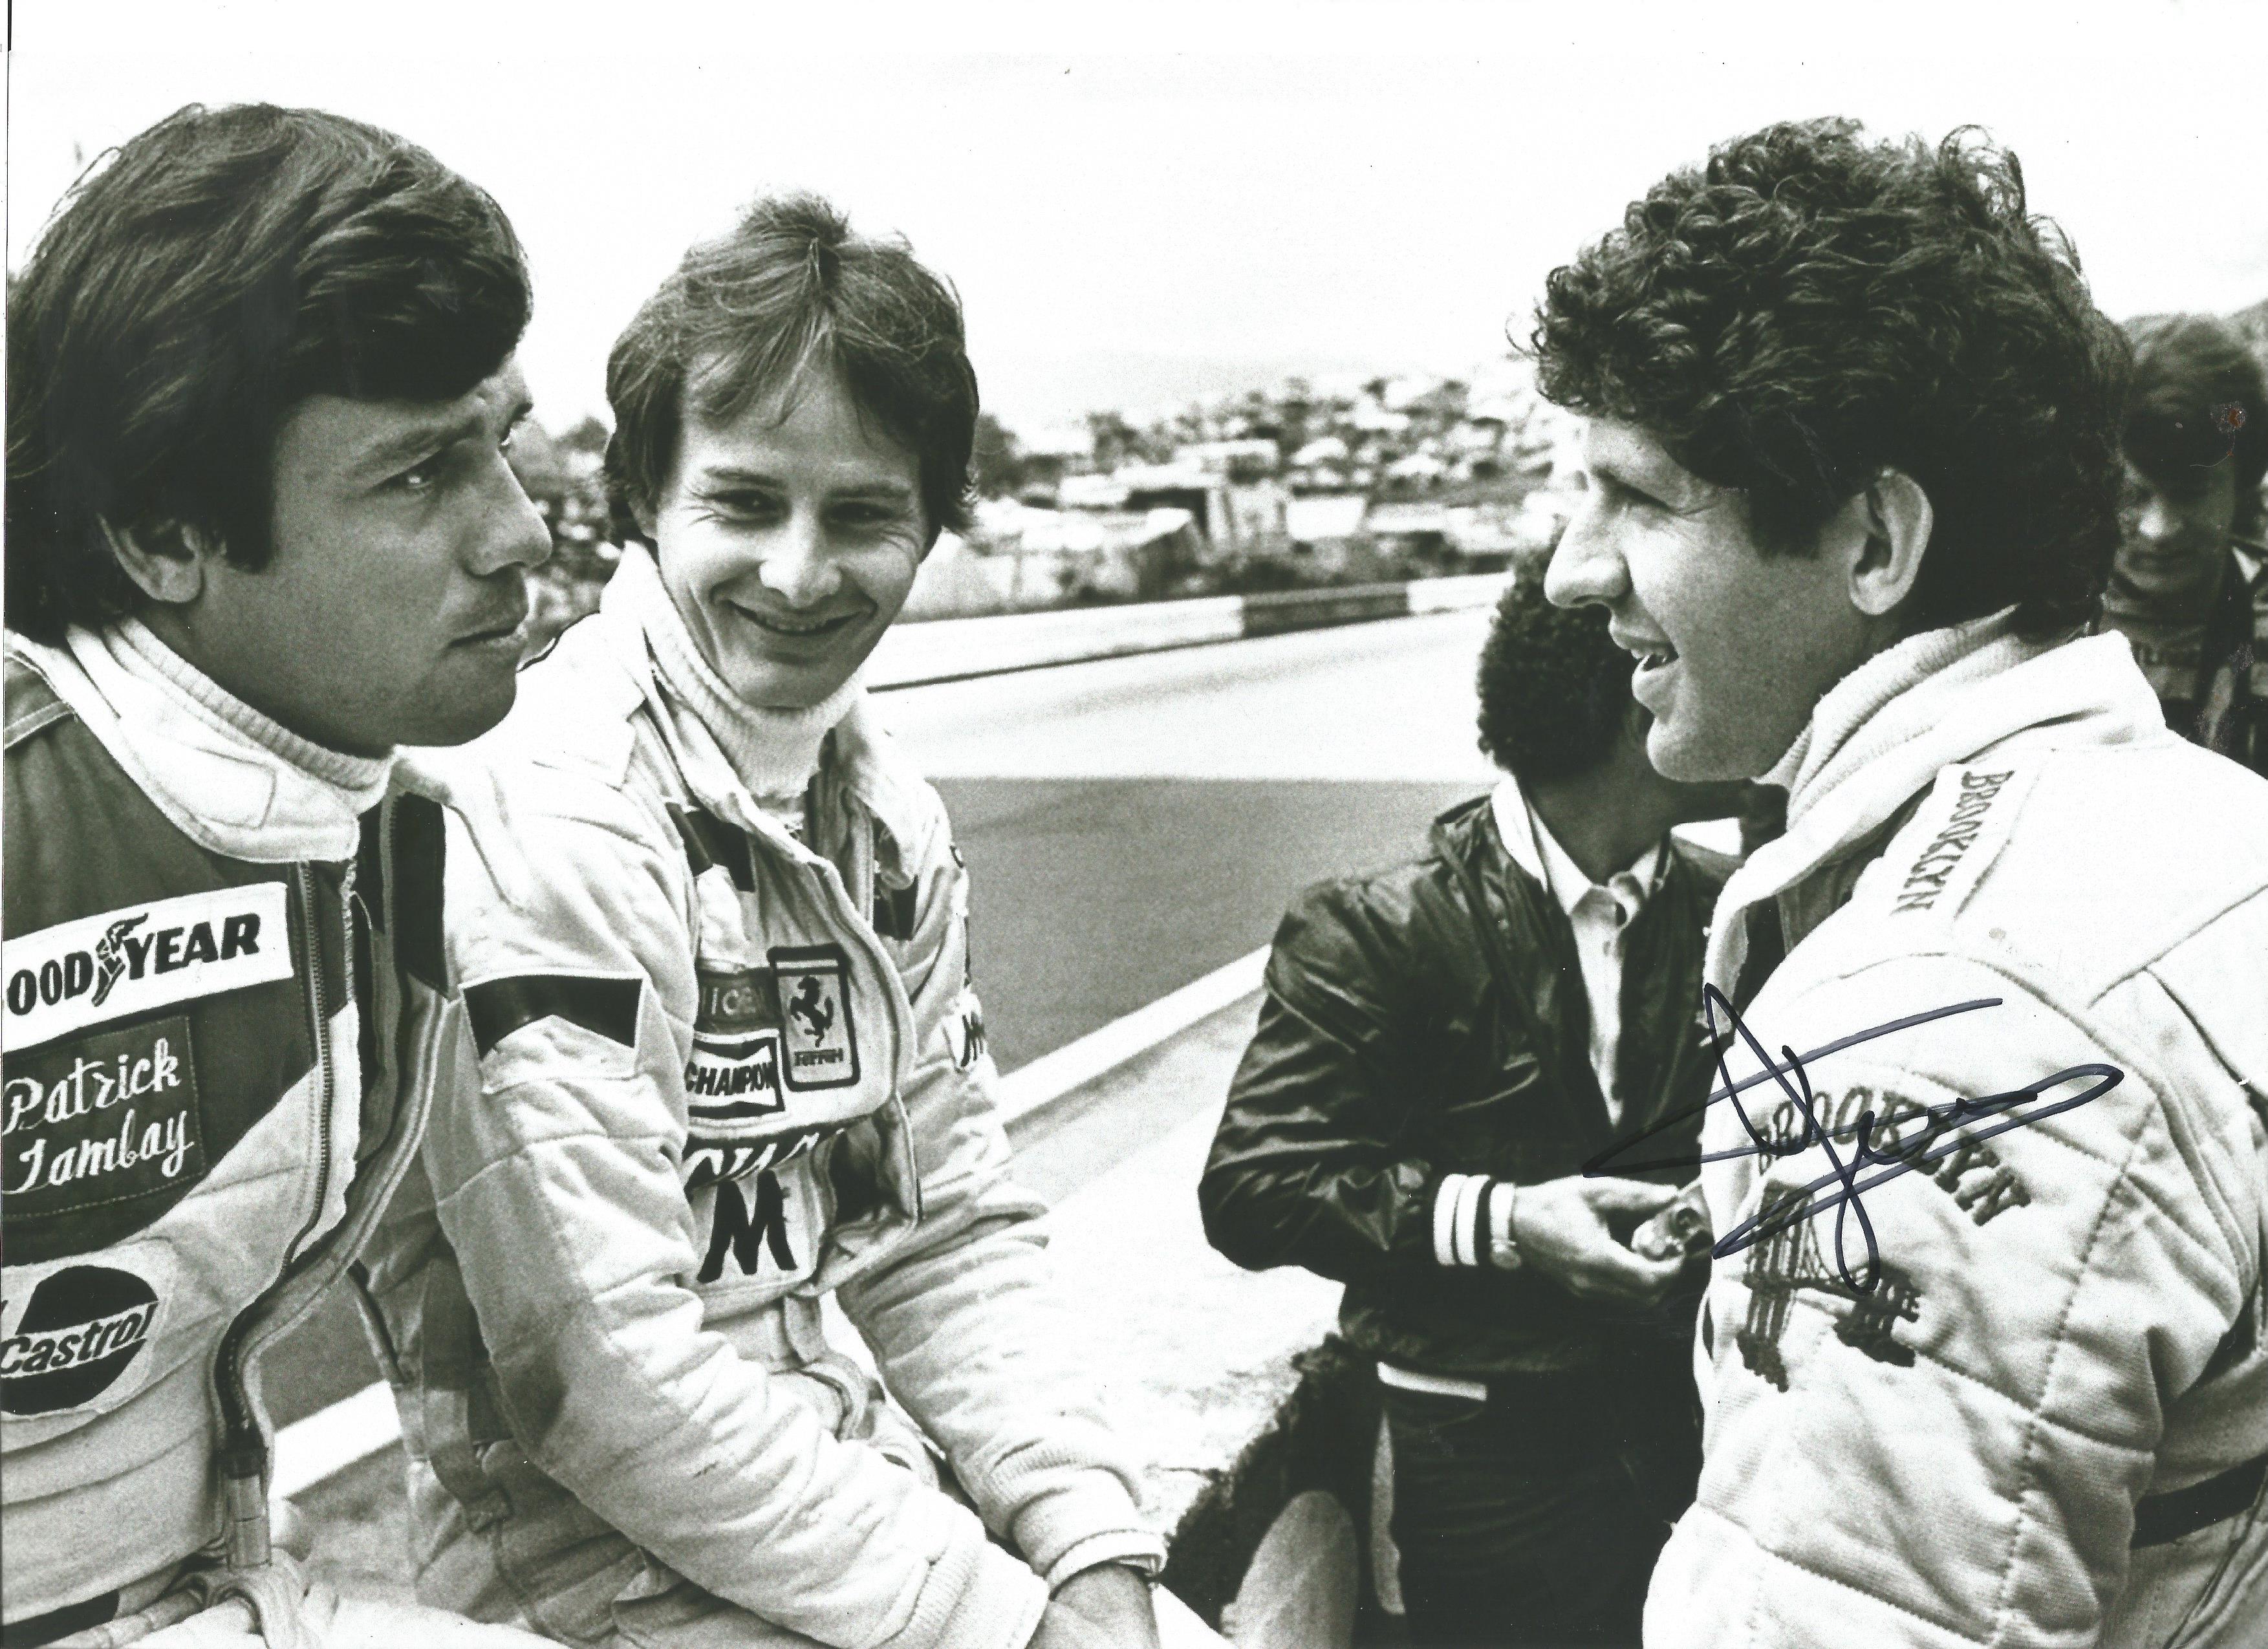 Motor Racing Jody Scheckter signed 12x8 black and white photo. Jody David Scheckter (born 29 January